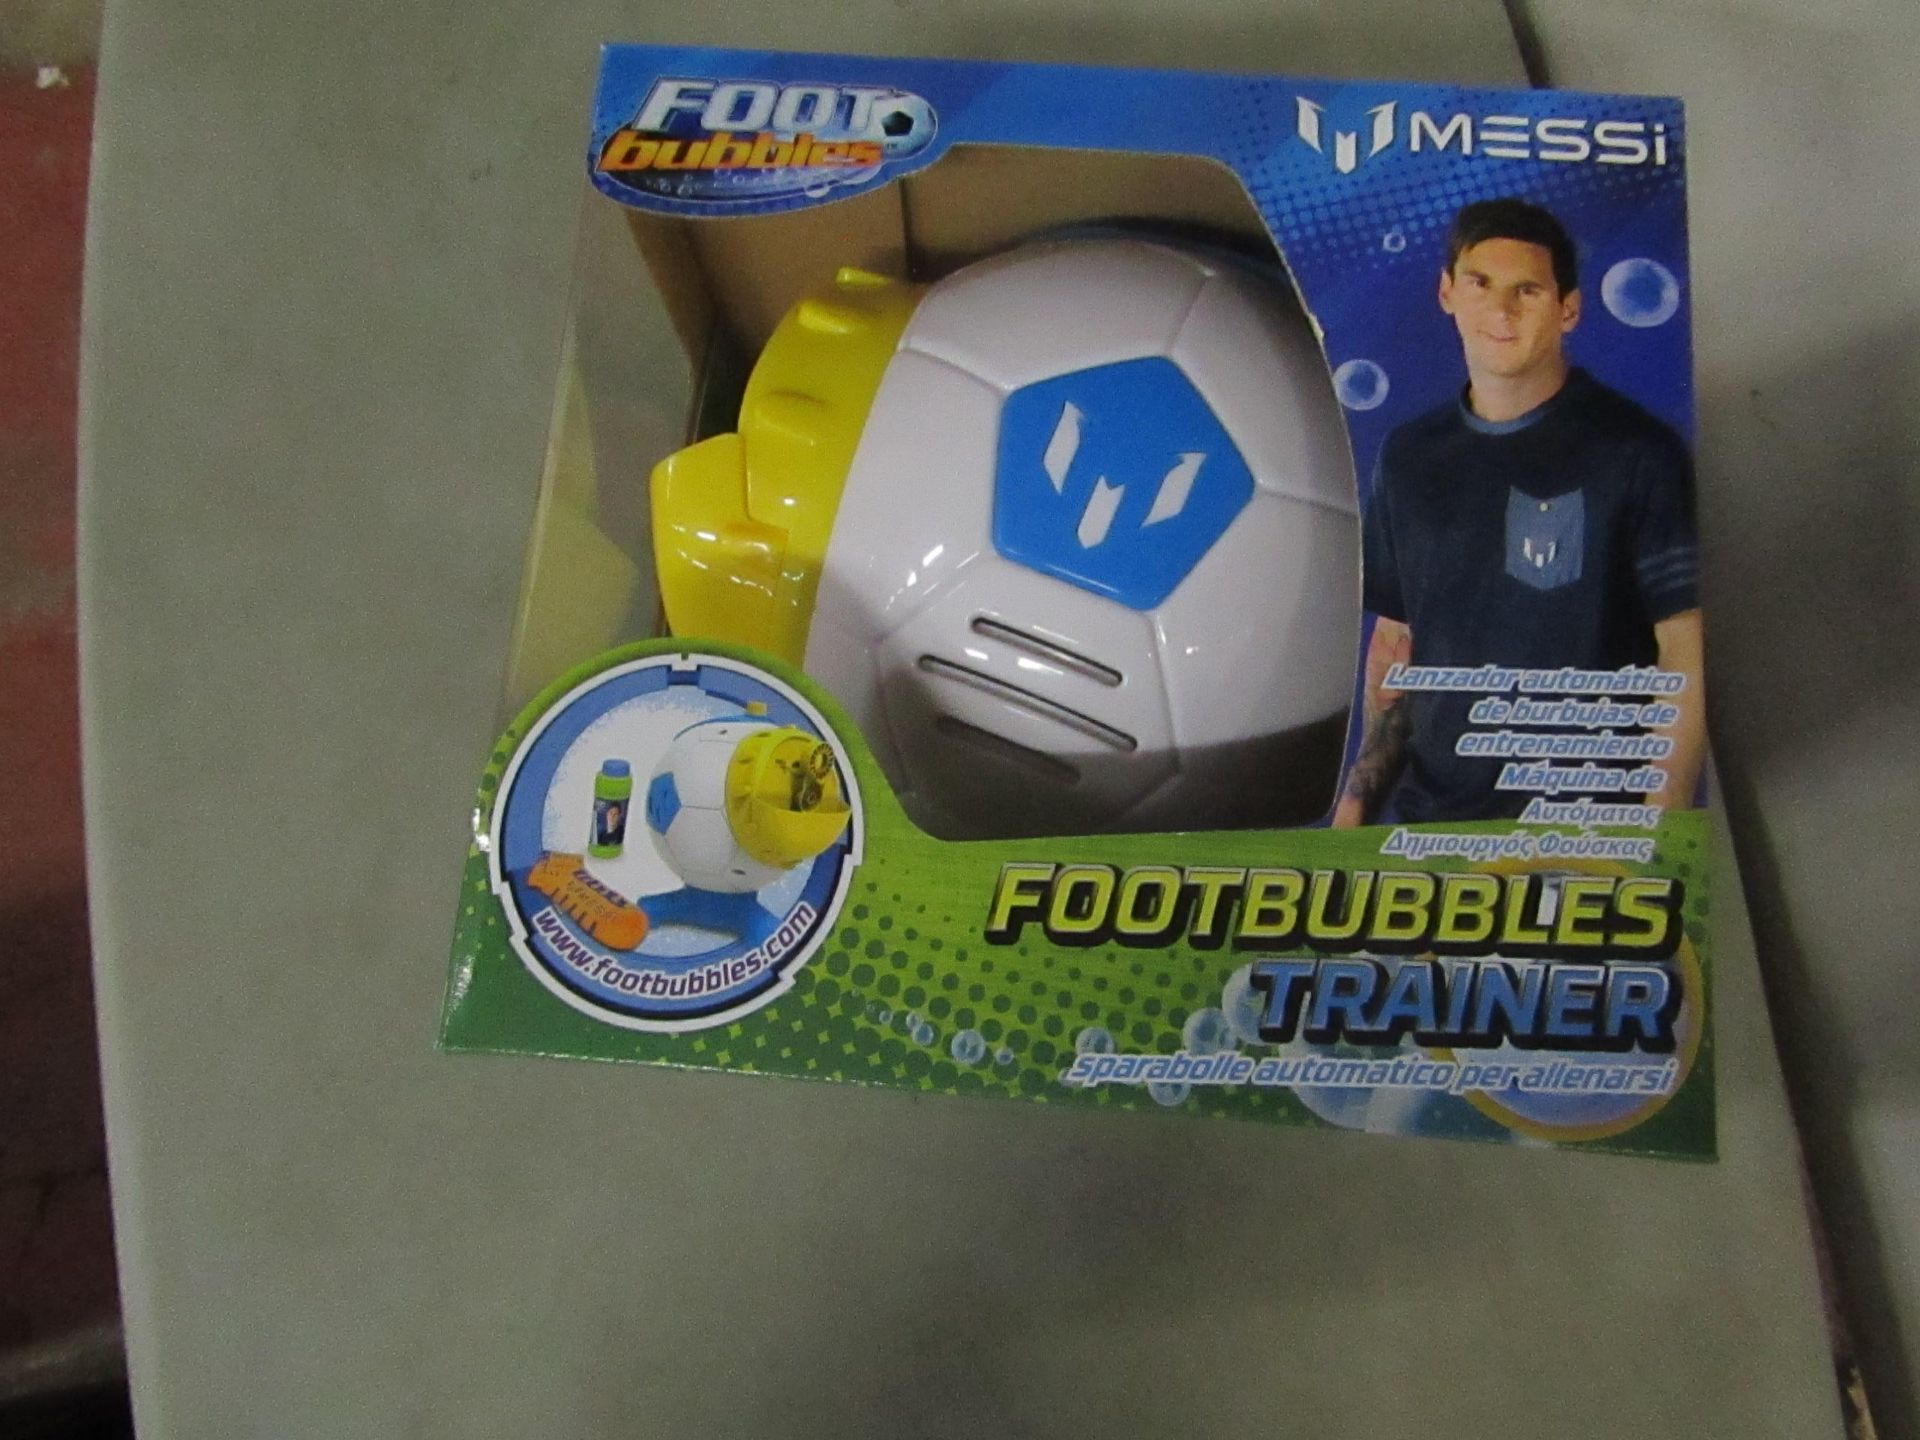 Messi Footbubbles trainer - looks Unused & Boxed.